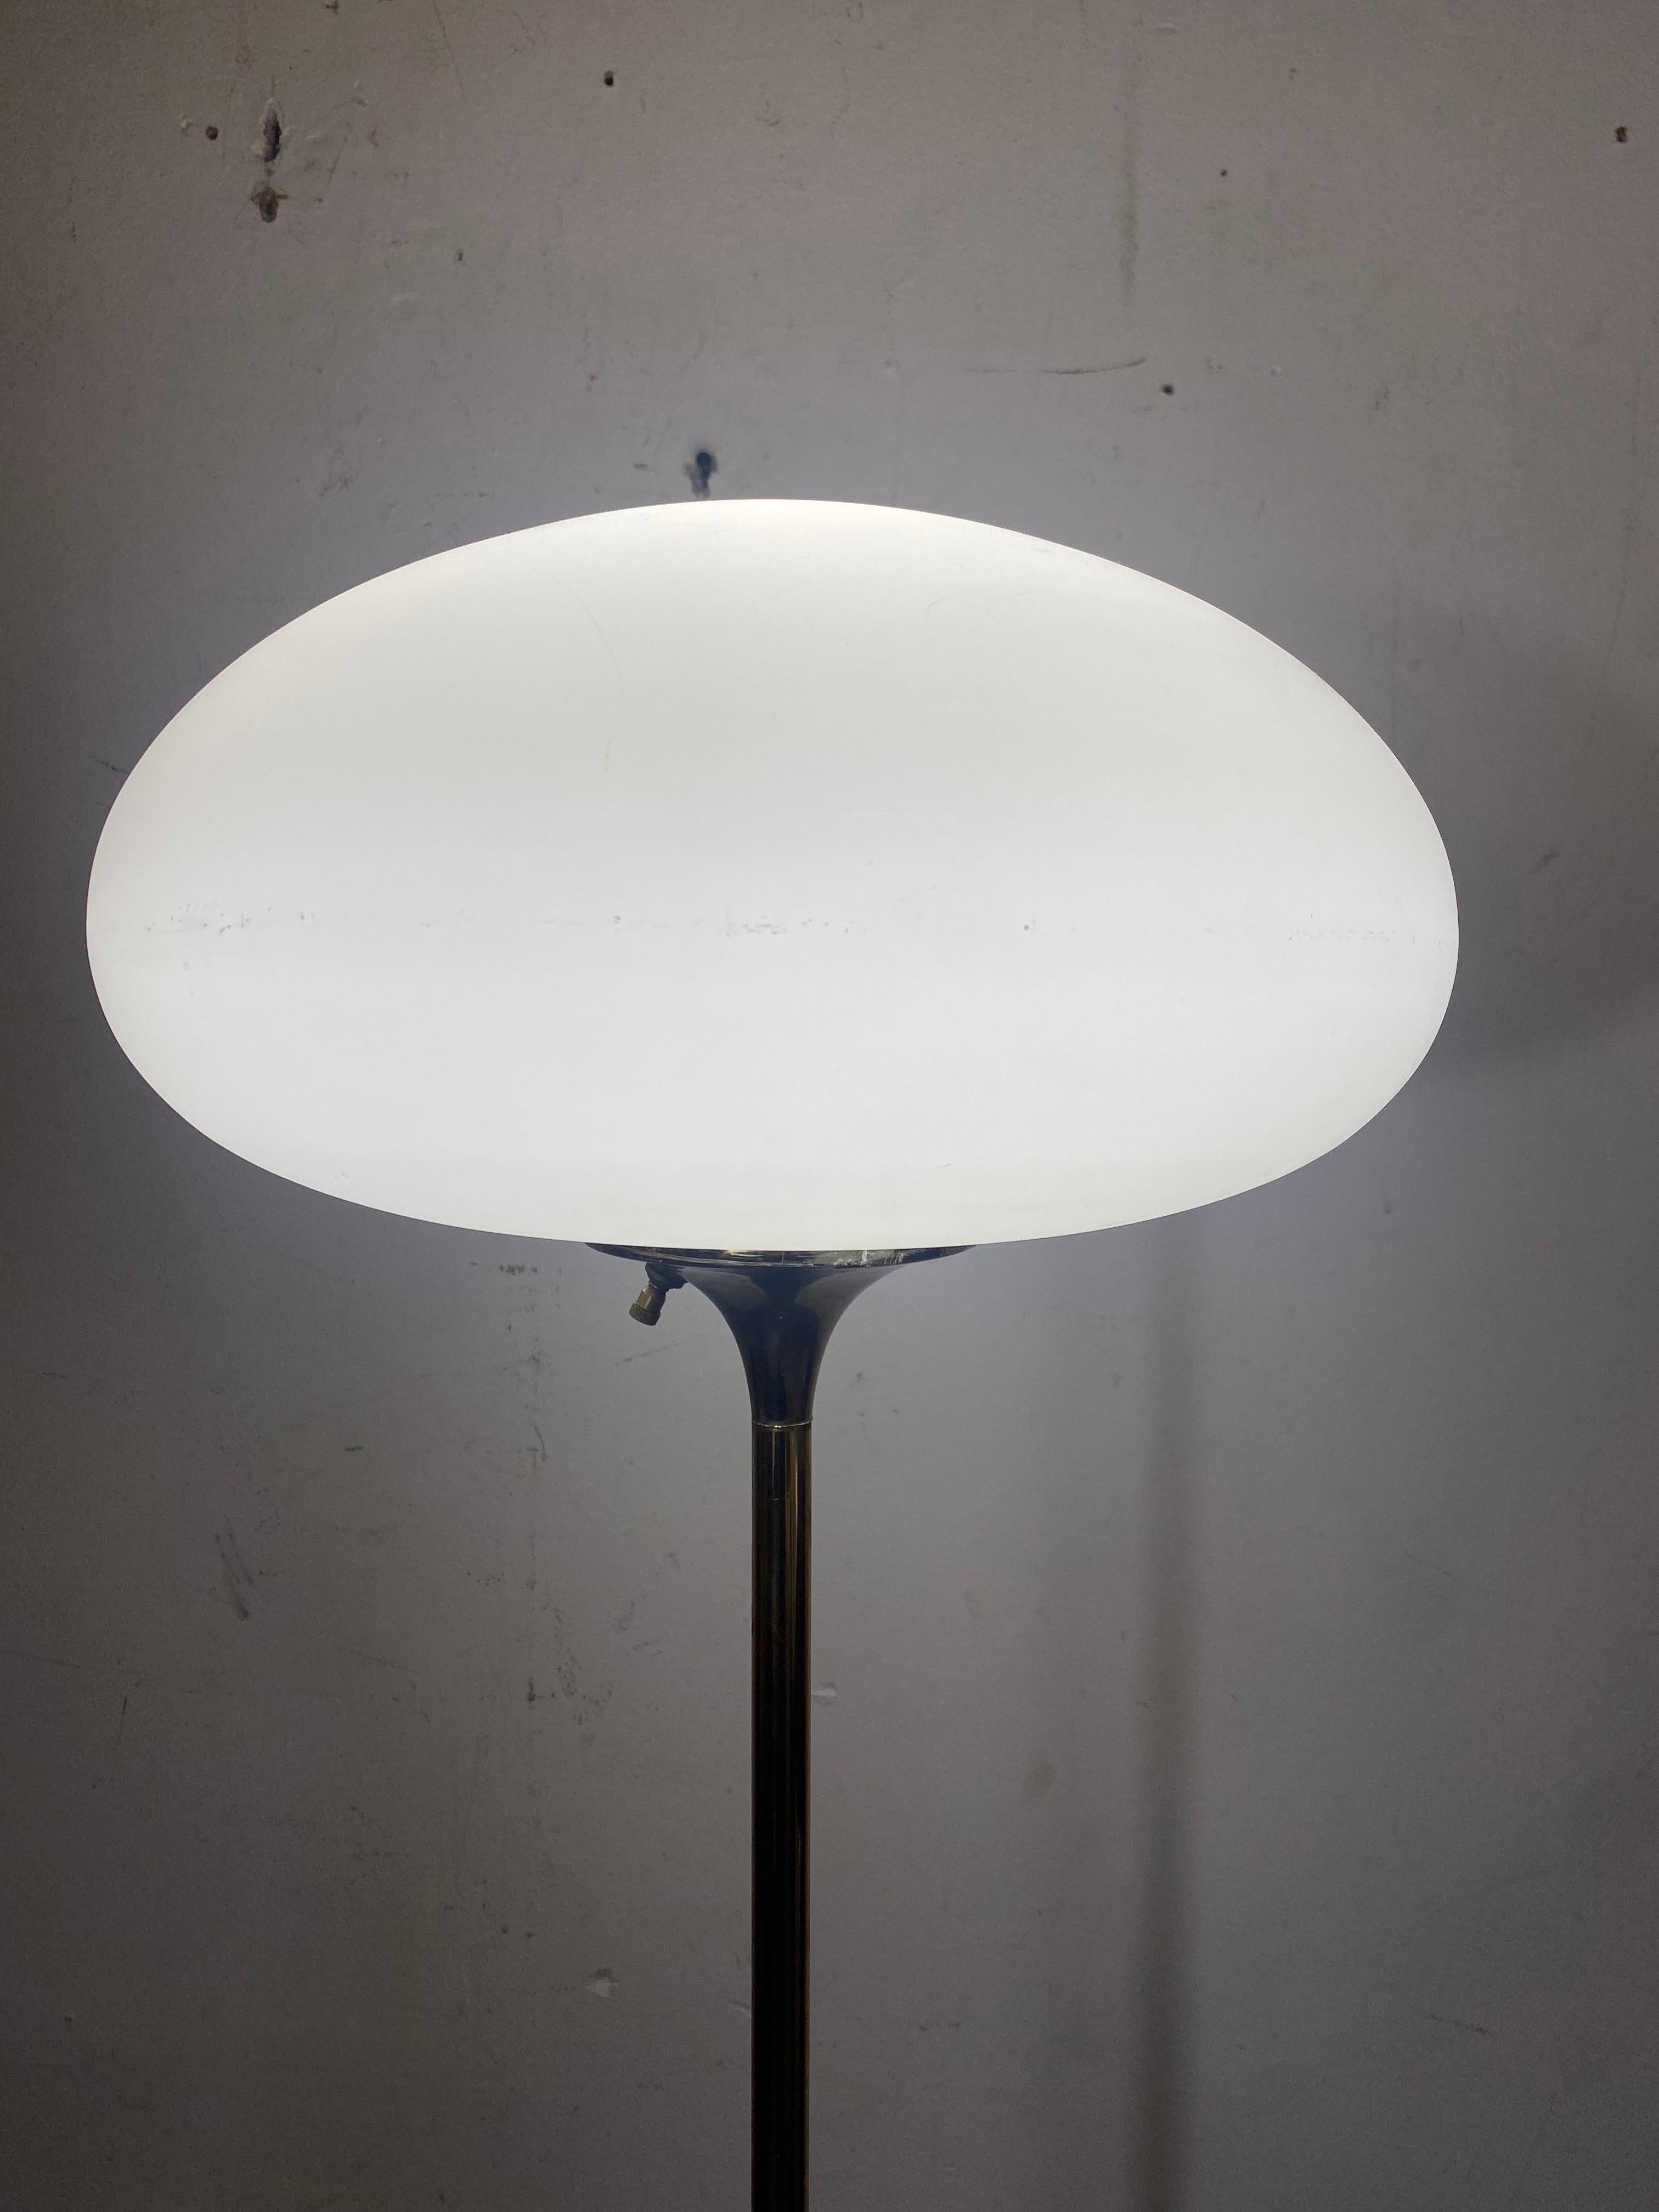 Iconic 1960s Floor Lamp by Laurel, Gold Standard, Blown Glass Mushroom Shade 2